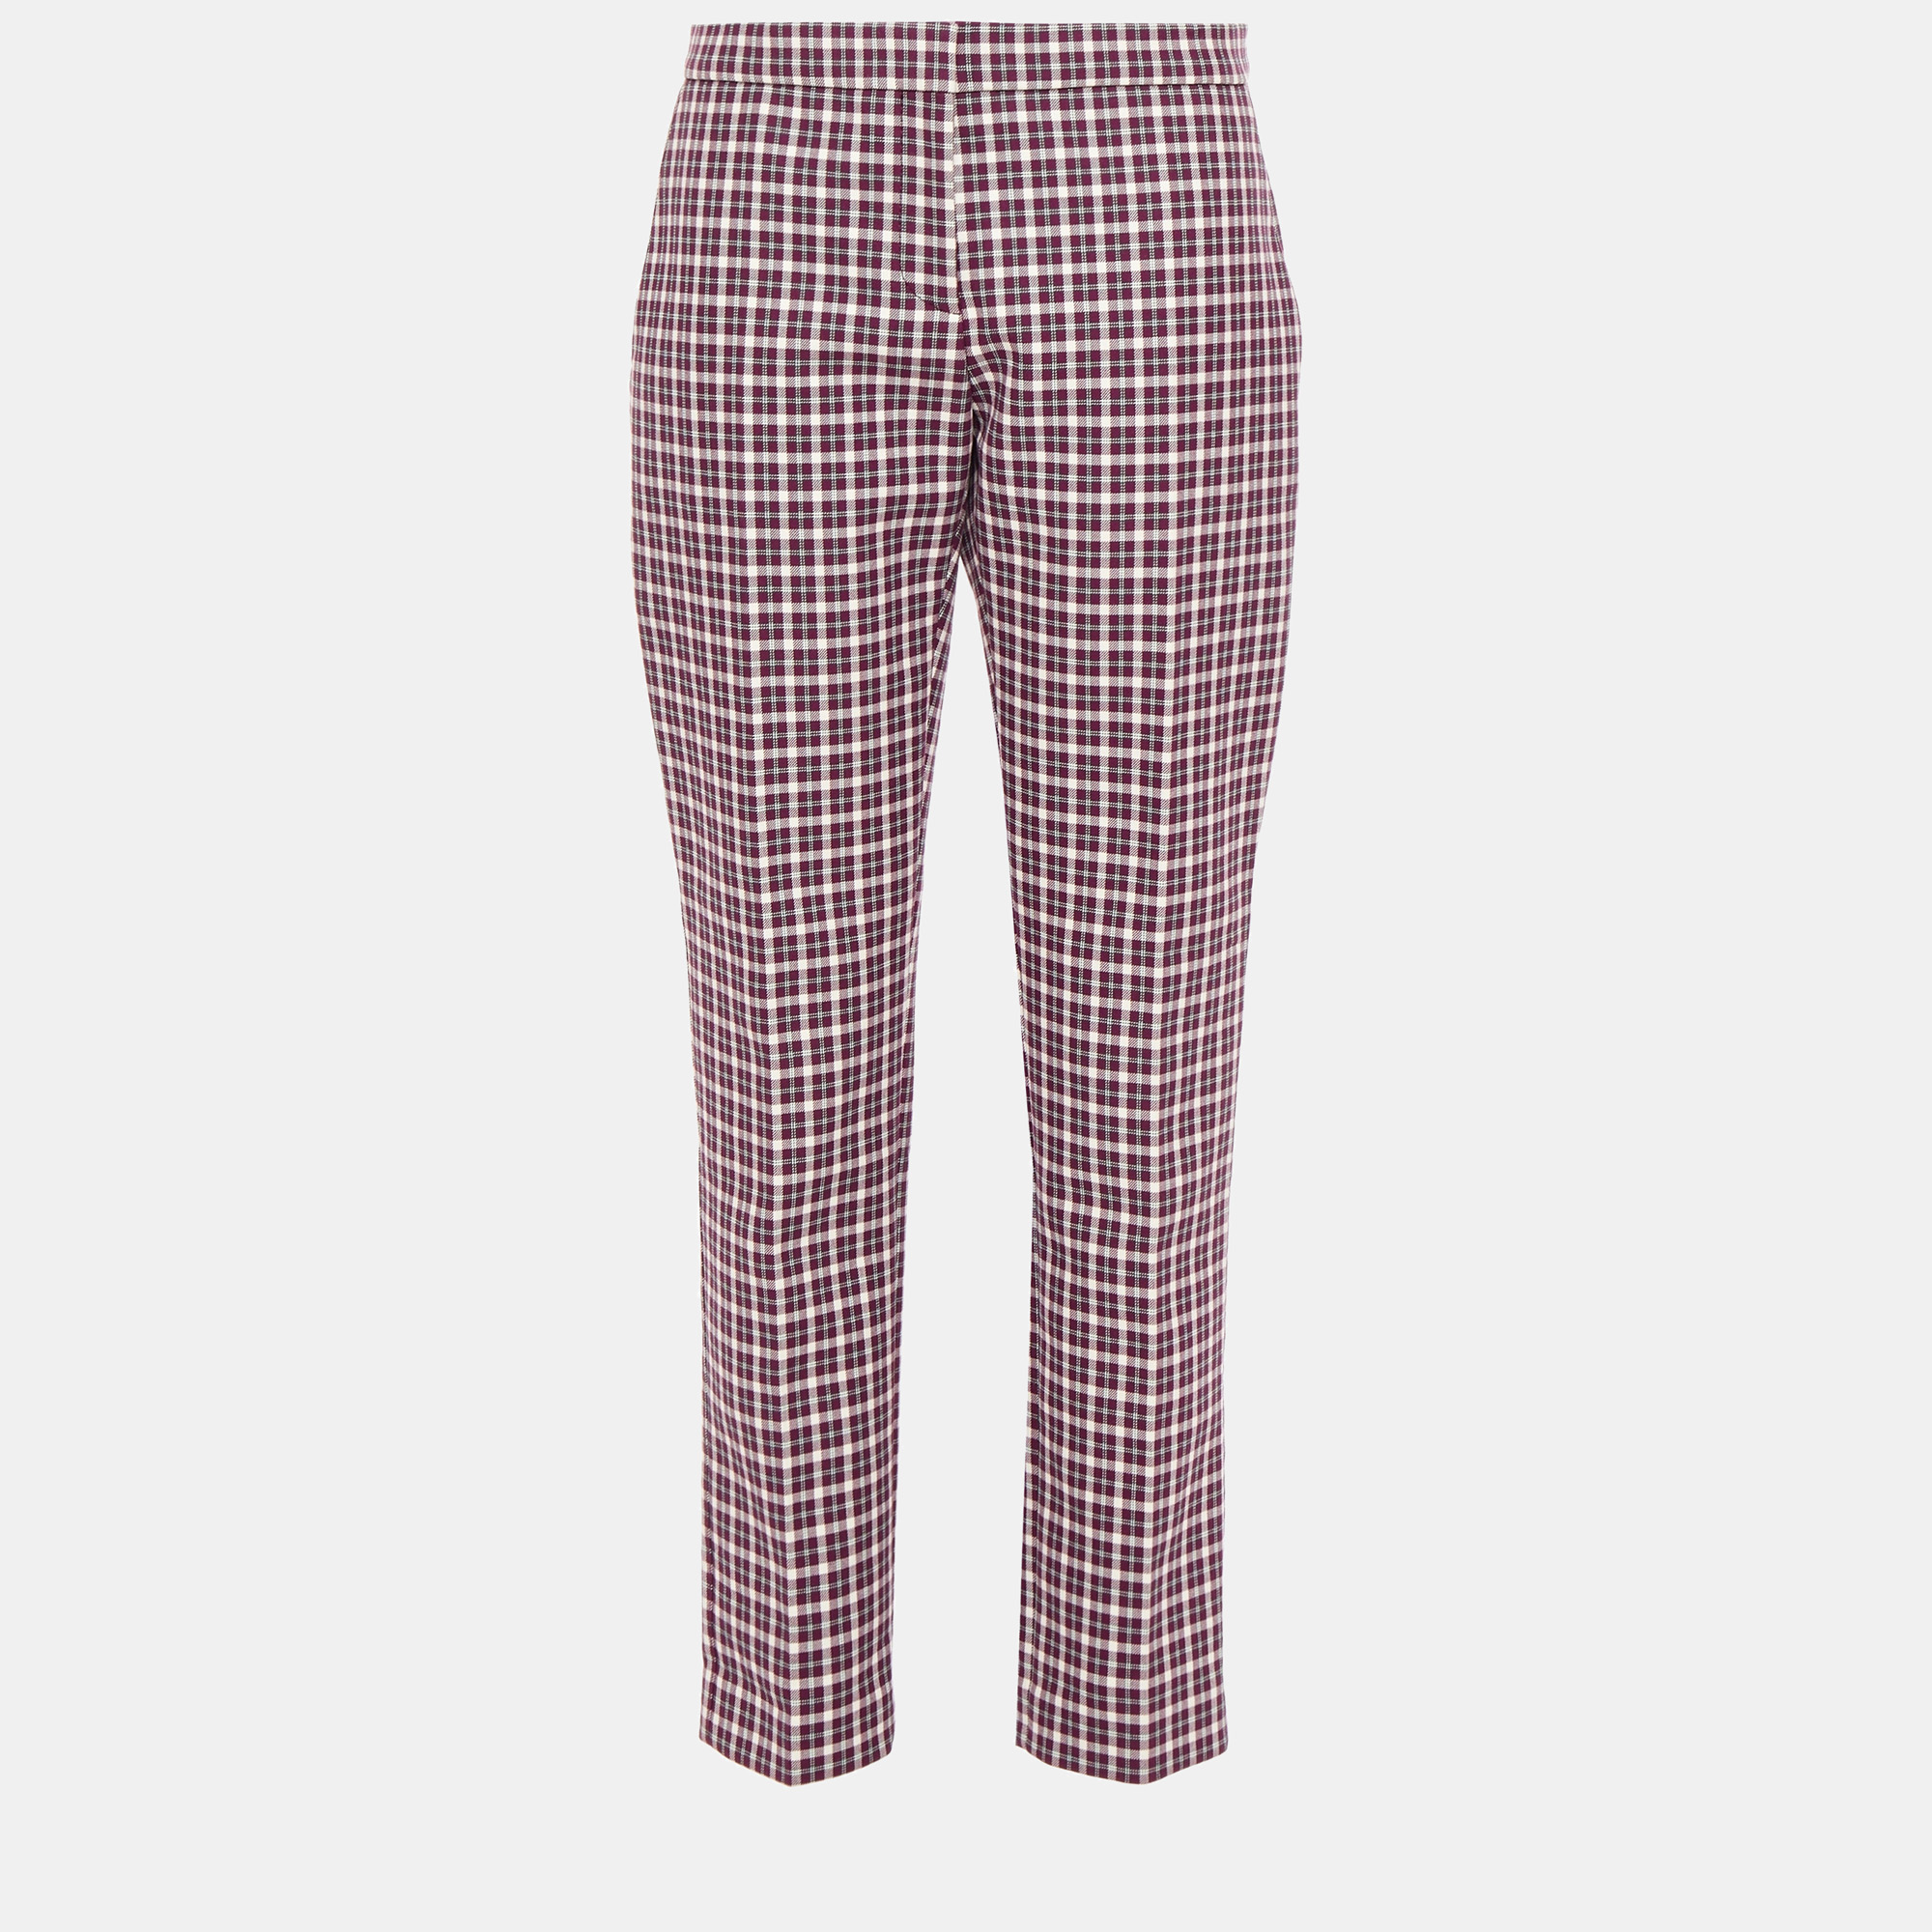 Burberry purple/white check cotton trousers size m (10)